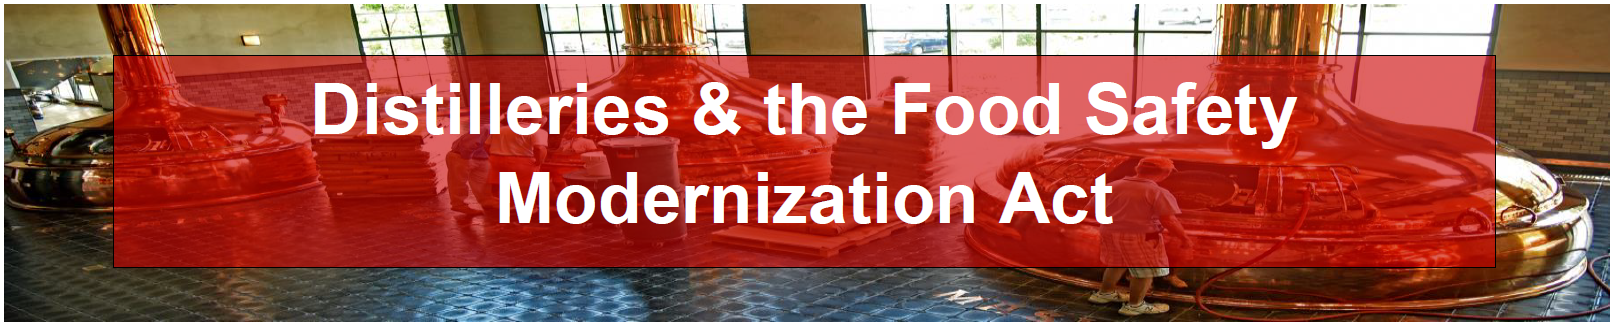 Distilleries & the Food Safety Modernization Act